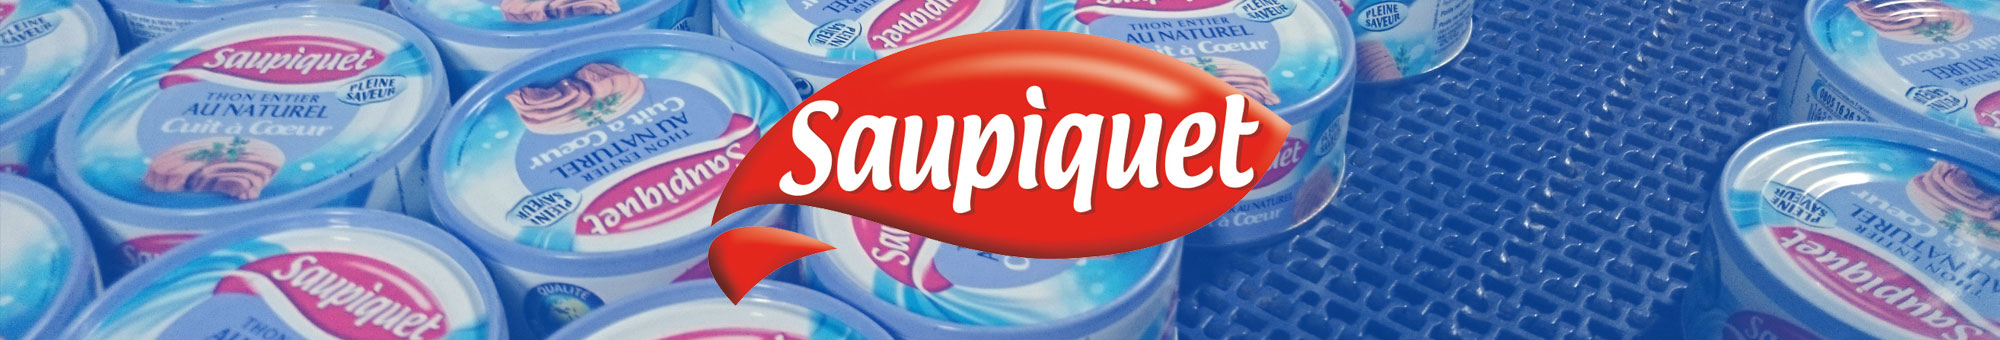 Logo de Saupiquet